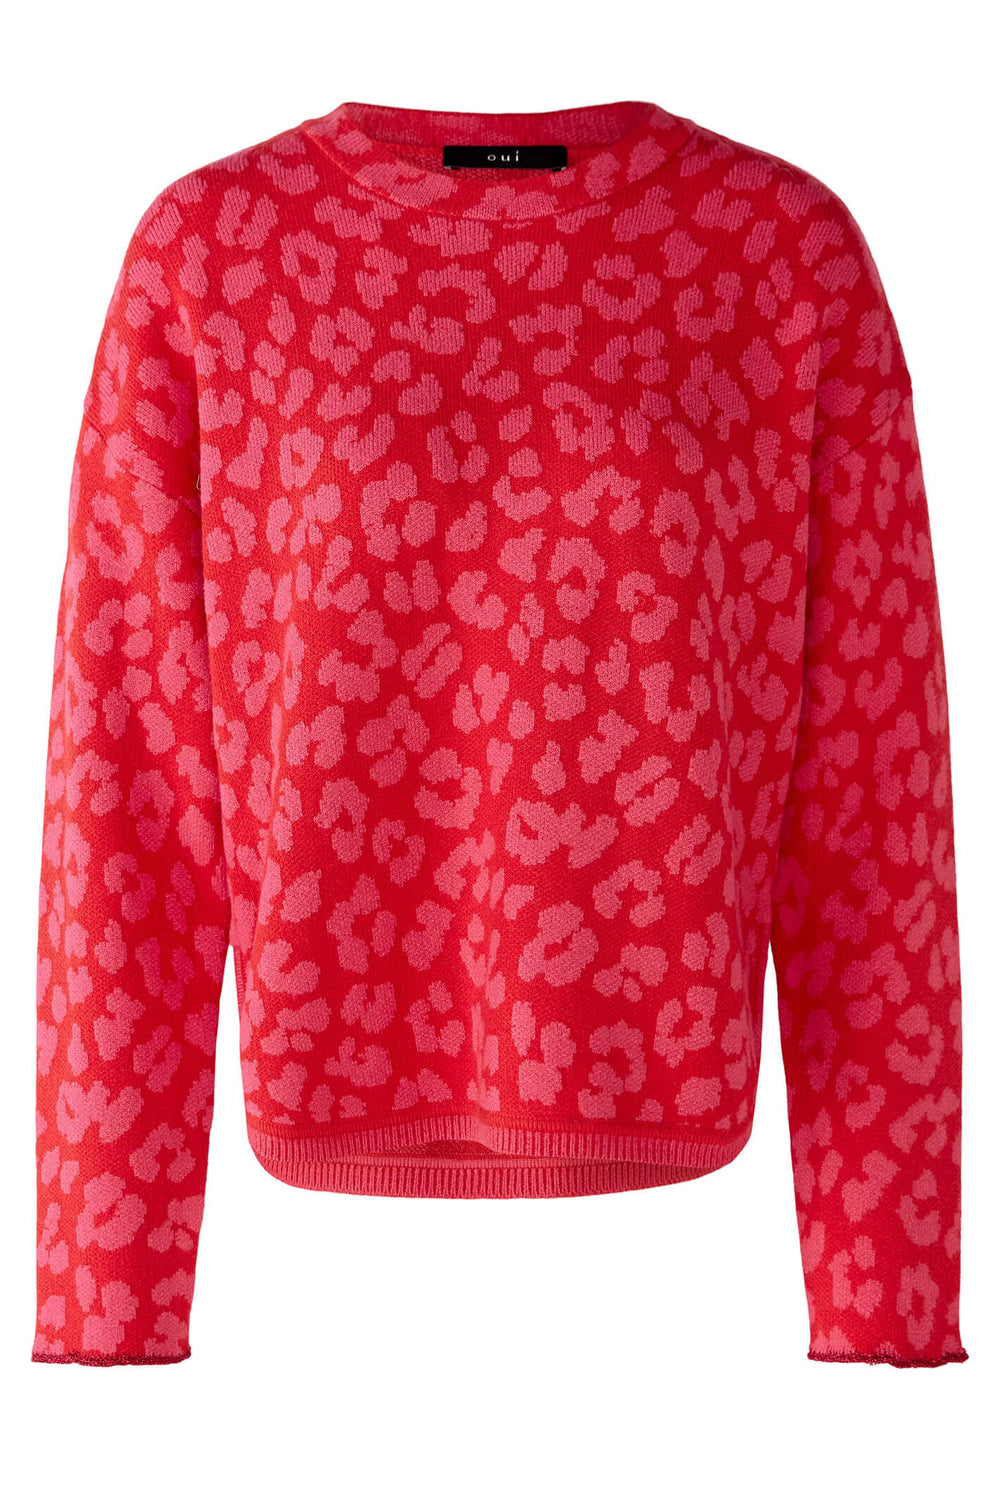 Oui 79997 Pink Red Animal Print Jumper - Olivia Grace Fashion